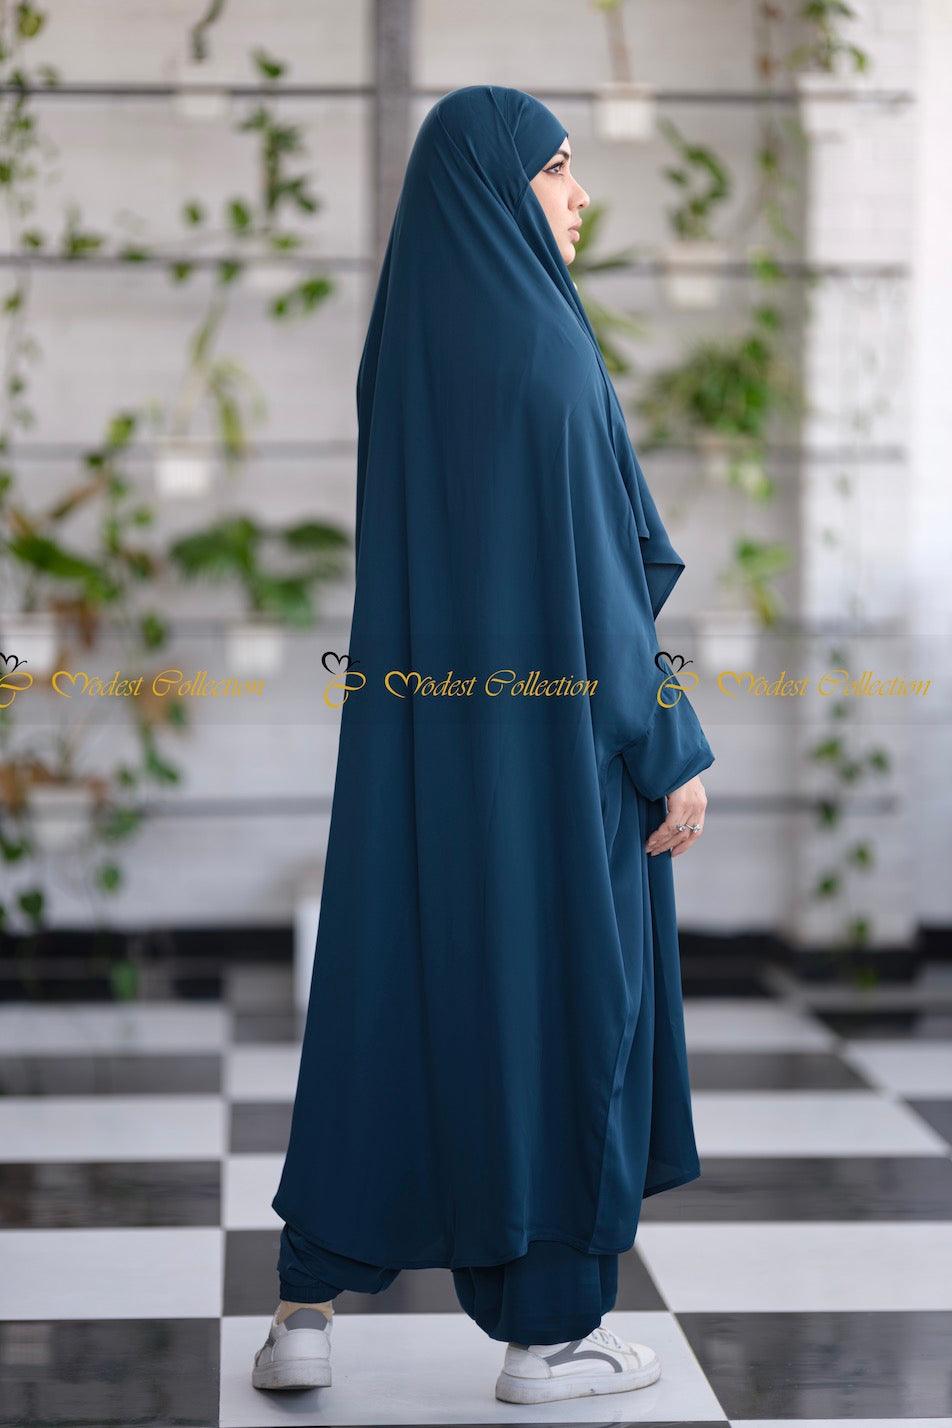 Amaya Jilbab Teal - Modest Collection